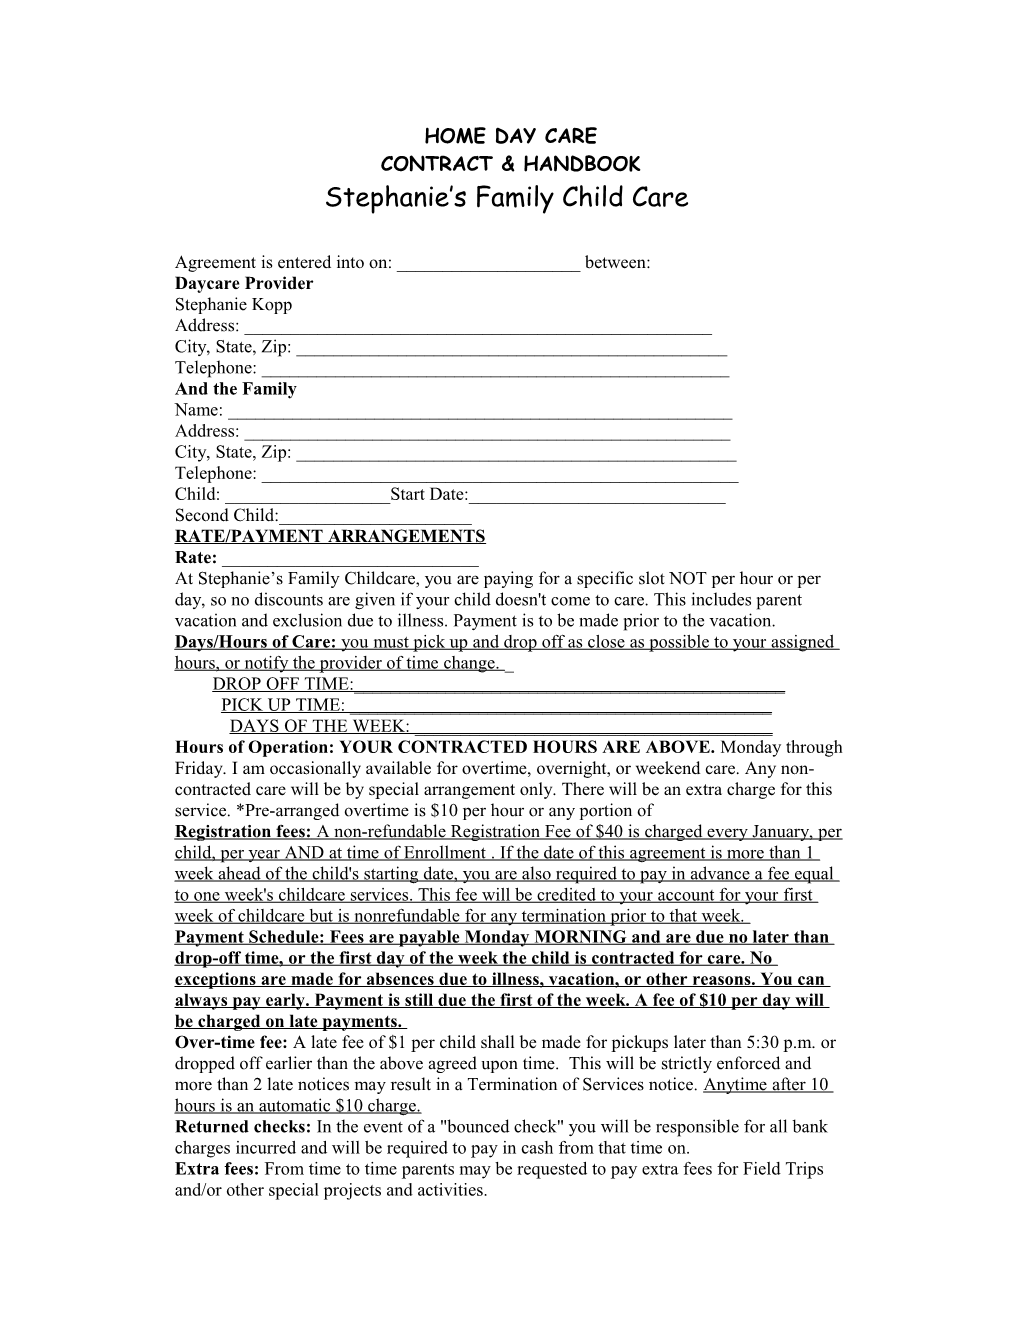 Stephanie S Family Child Care